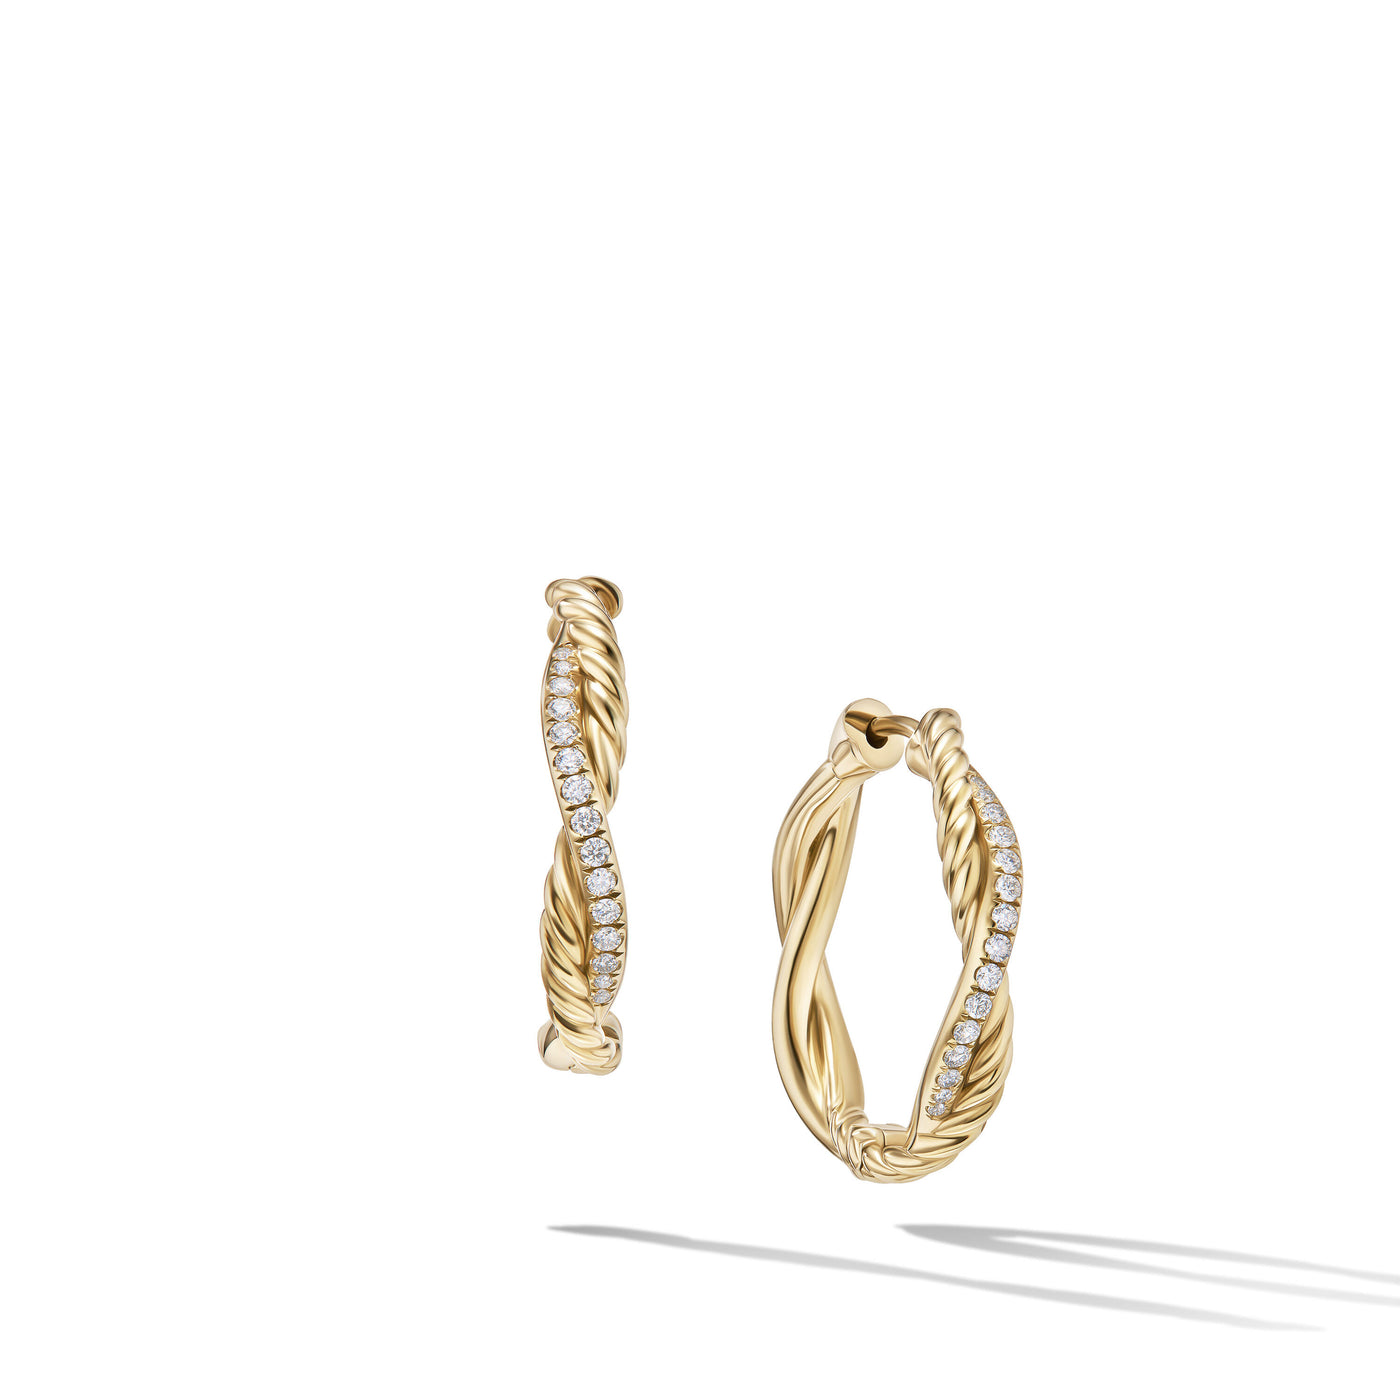 Petite Infinity Hoop Earrings in 18K Yellow Gold with Diamonds\, 17.3mm